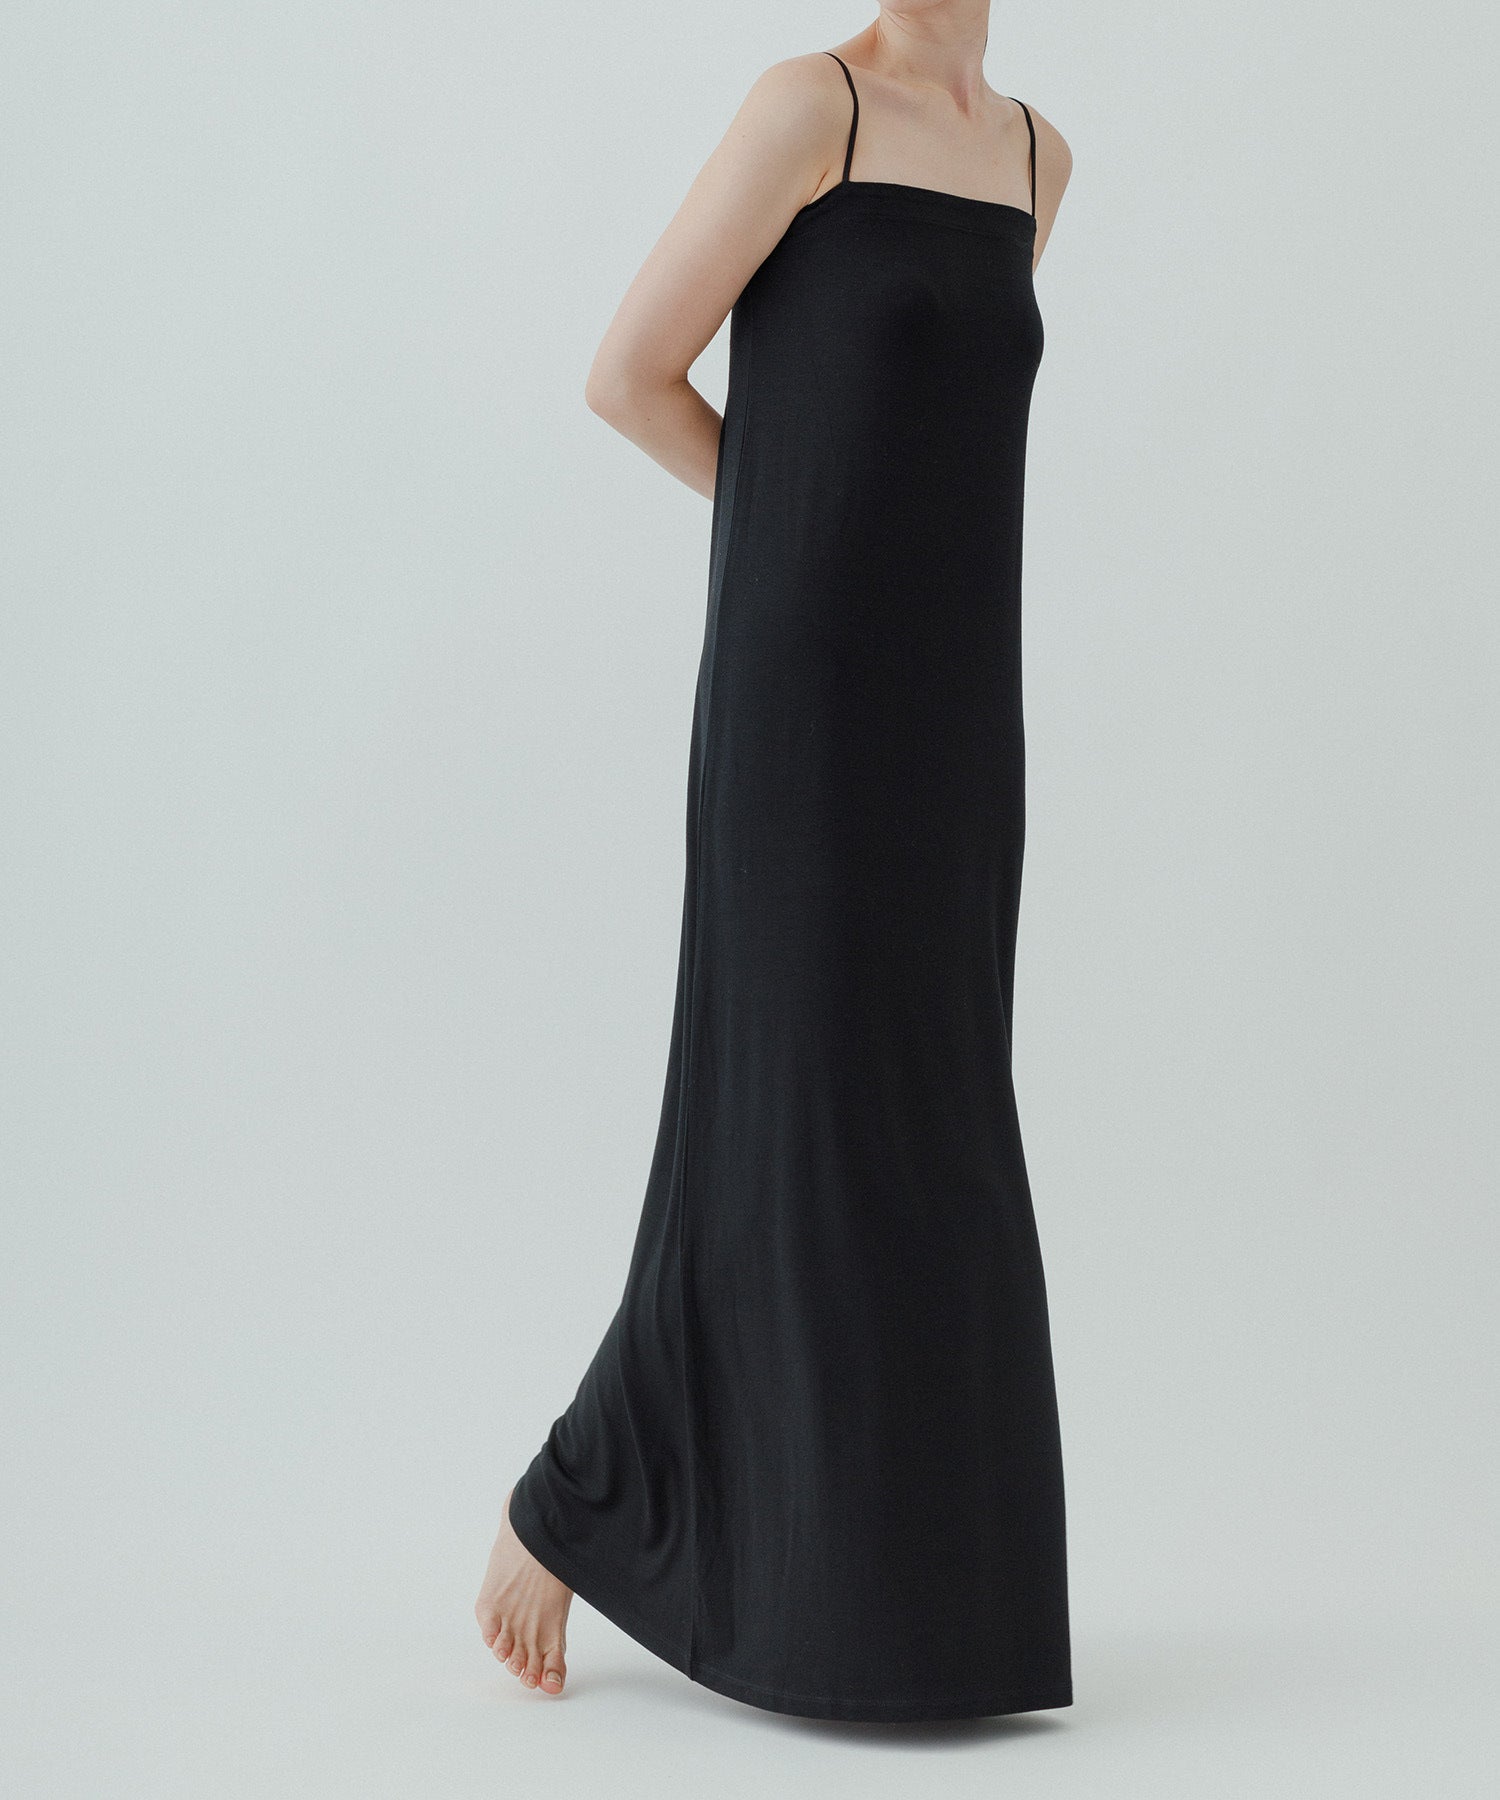 未使用新品 yo biotop lingerie long knit dress | angeloawards.com